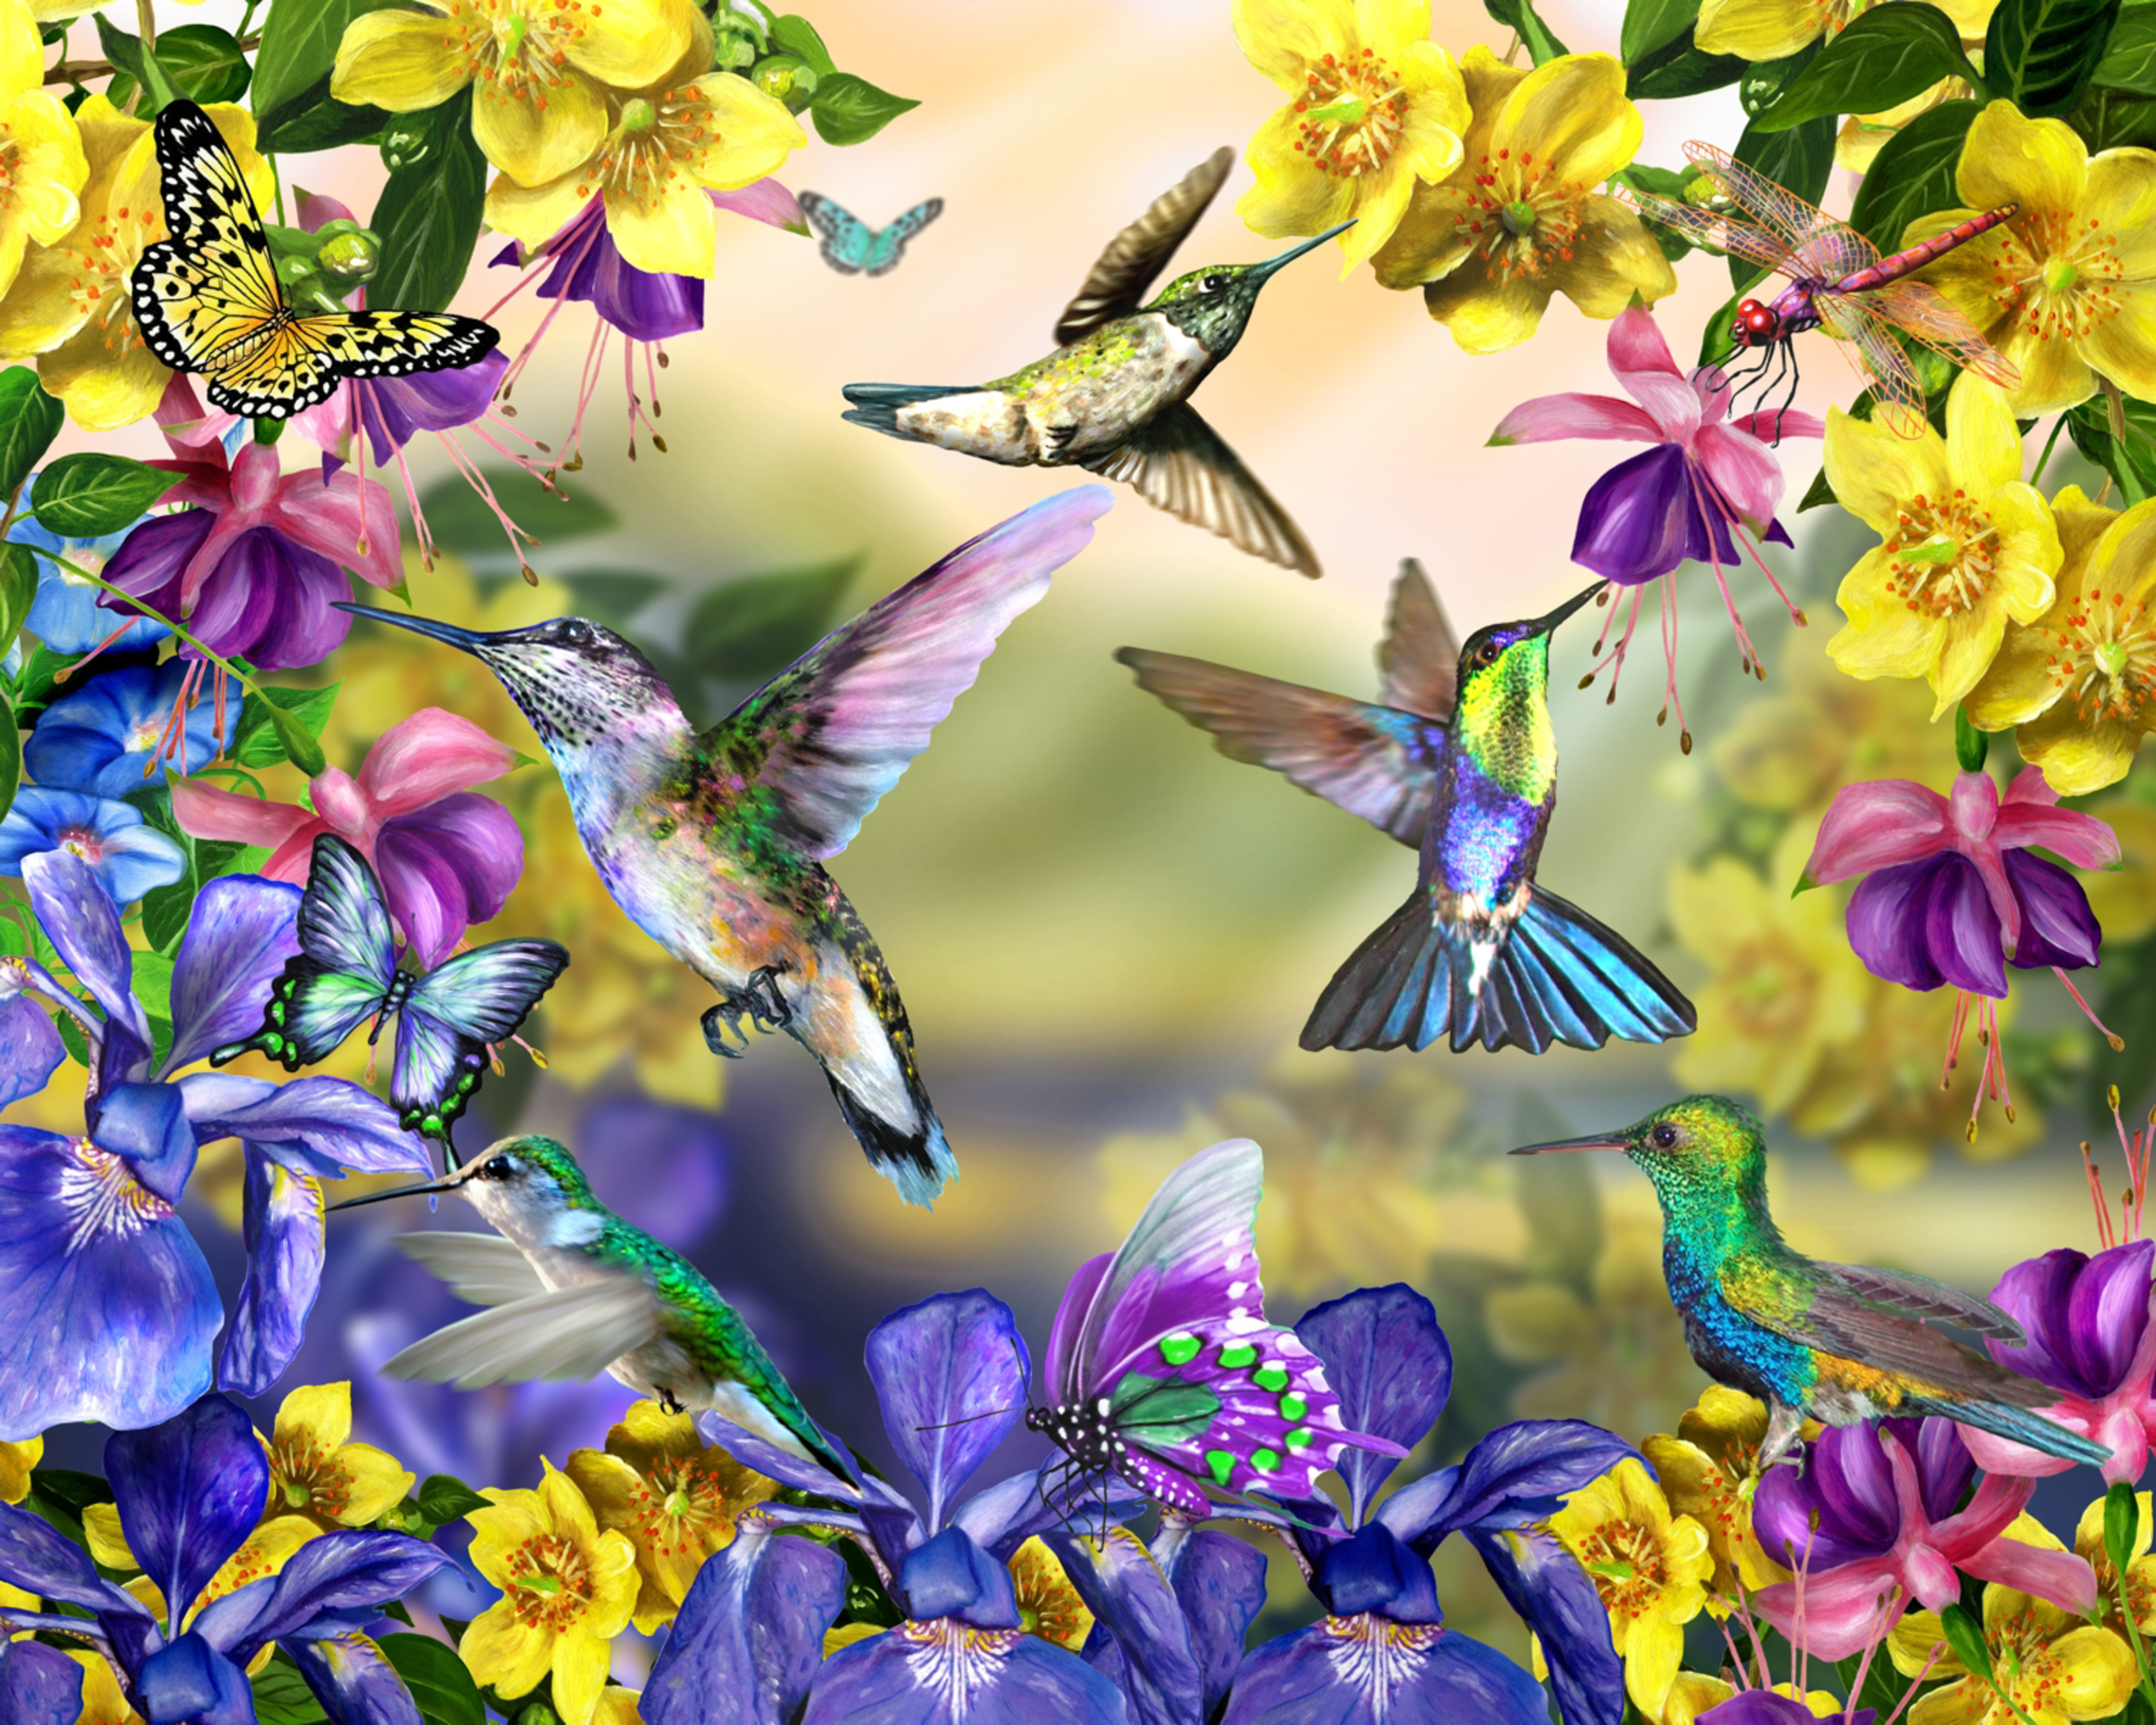 Tropical Botanical Flowers and Hummingbird Wall Art Mural